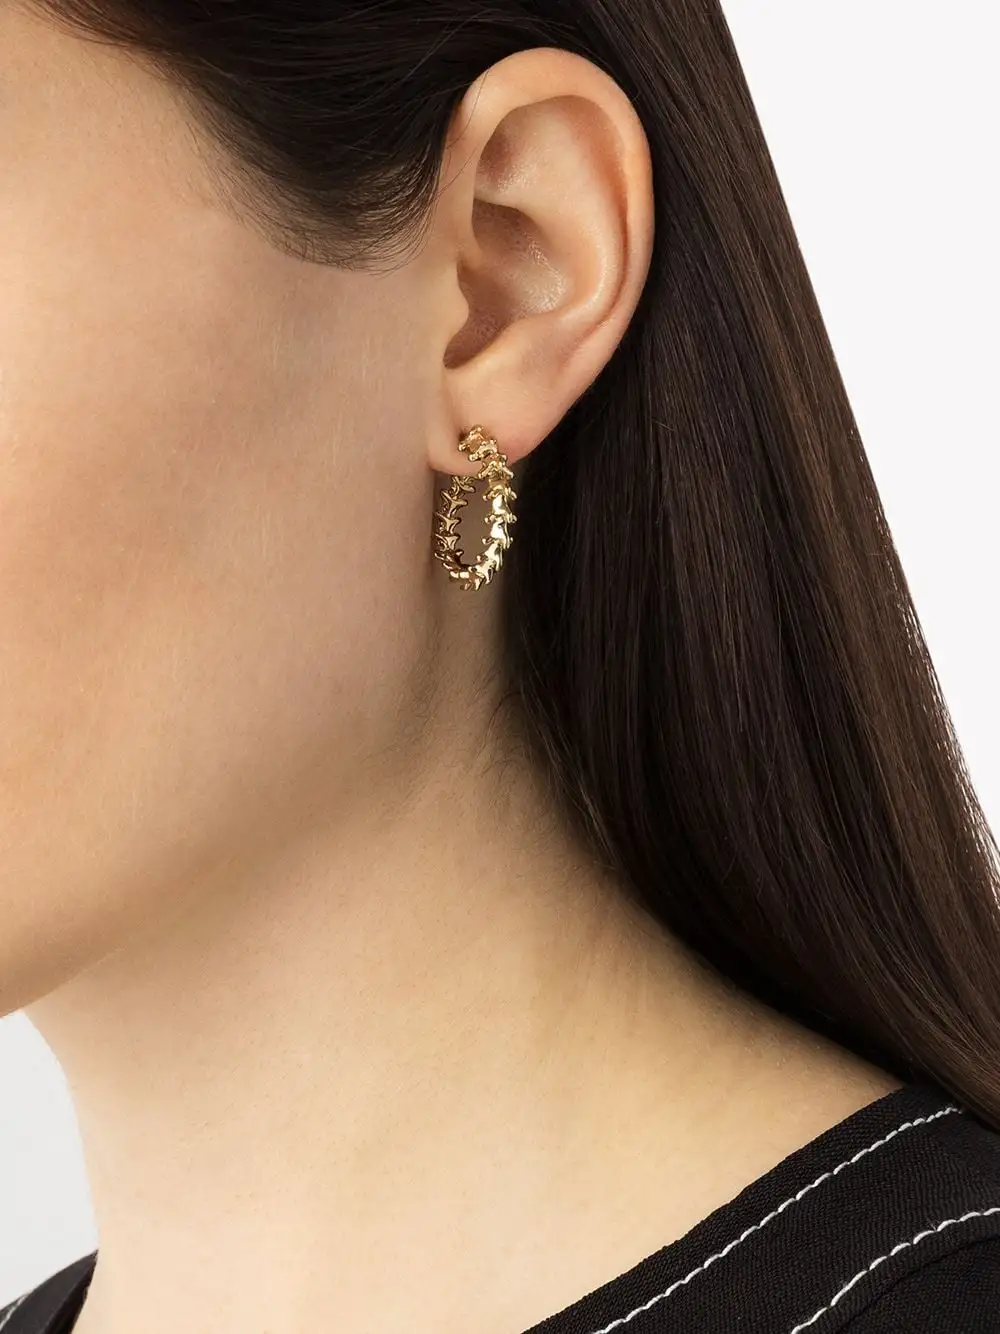 Fashion Simple Personality Tree Leaves Metal Earrings Jewelry